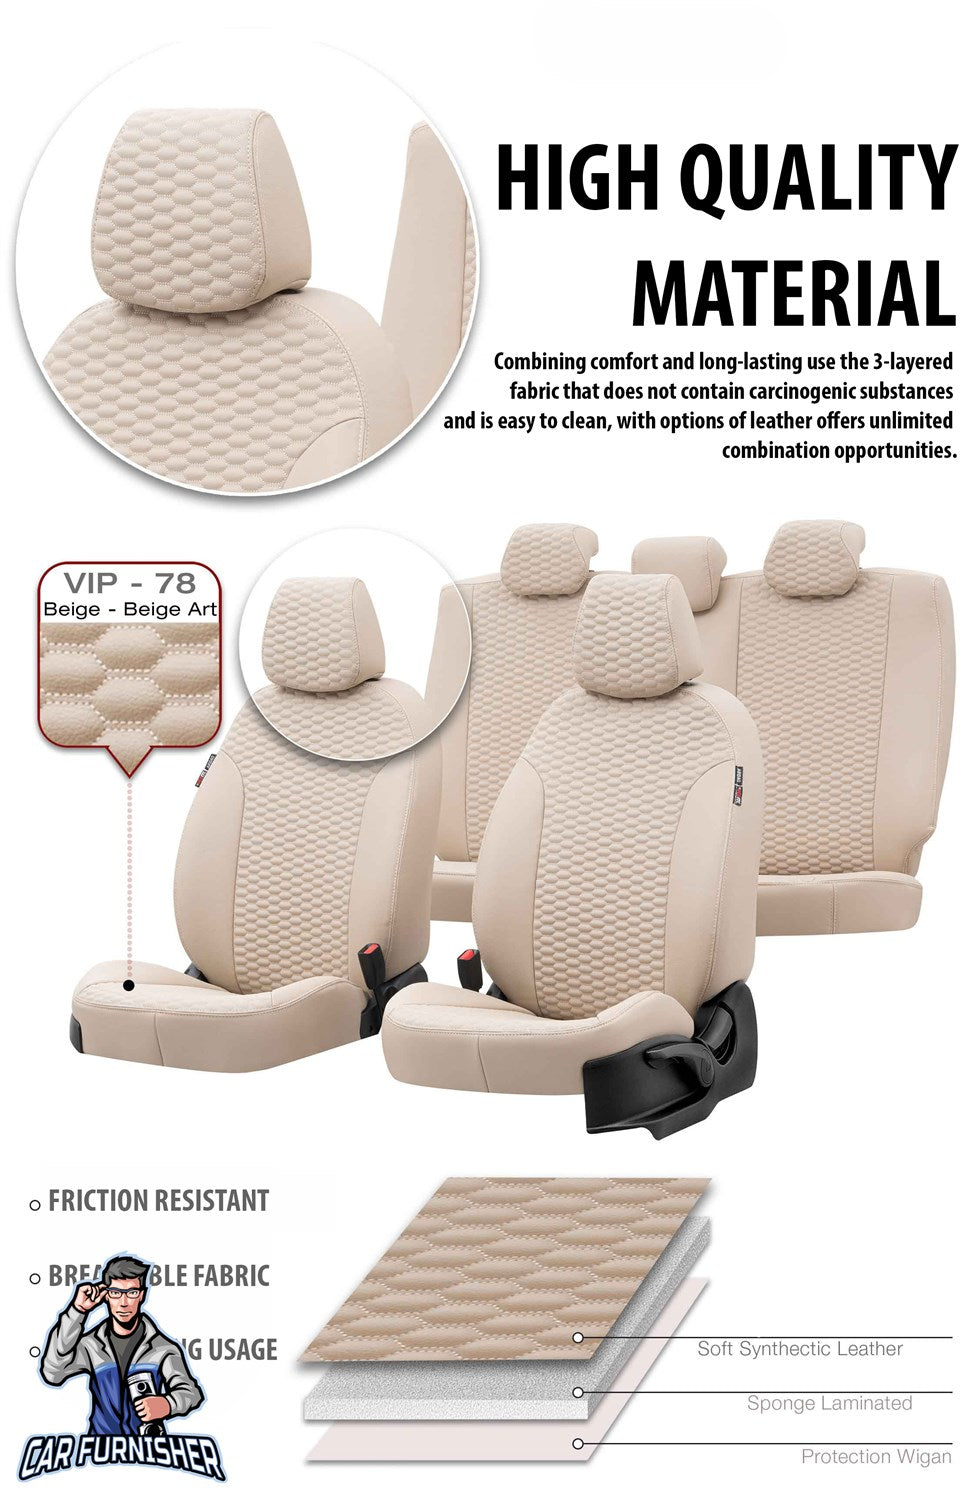 Volkswagen Jetta Seat Cover Tokyo Leather Design Black Leather